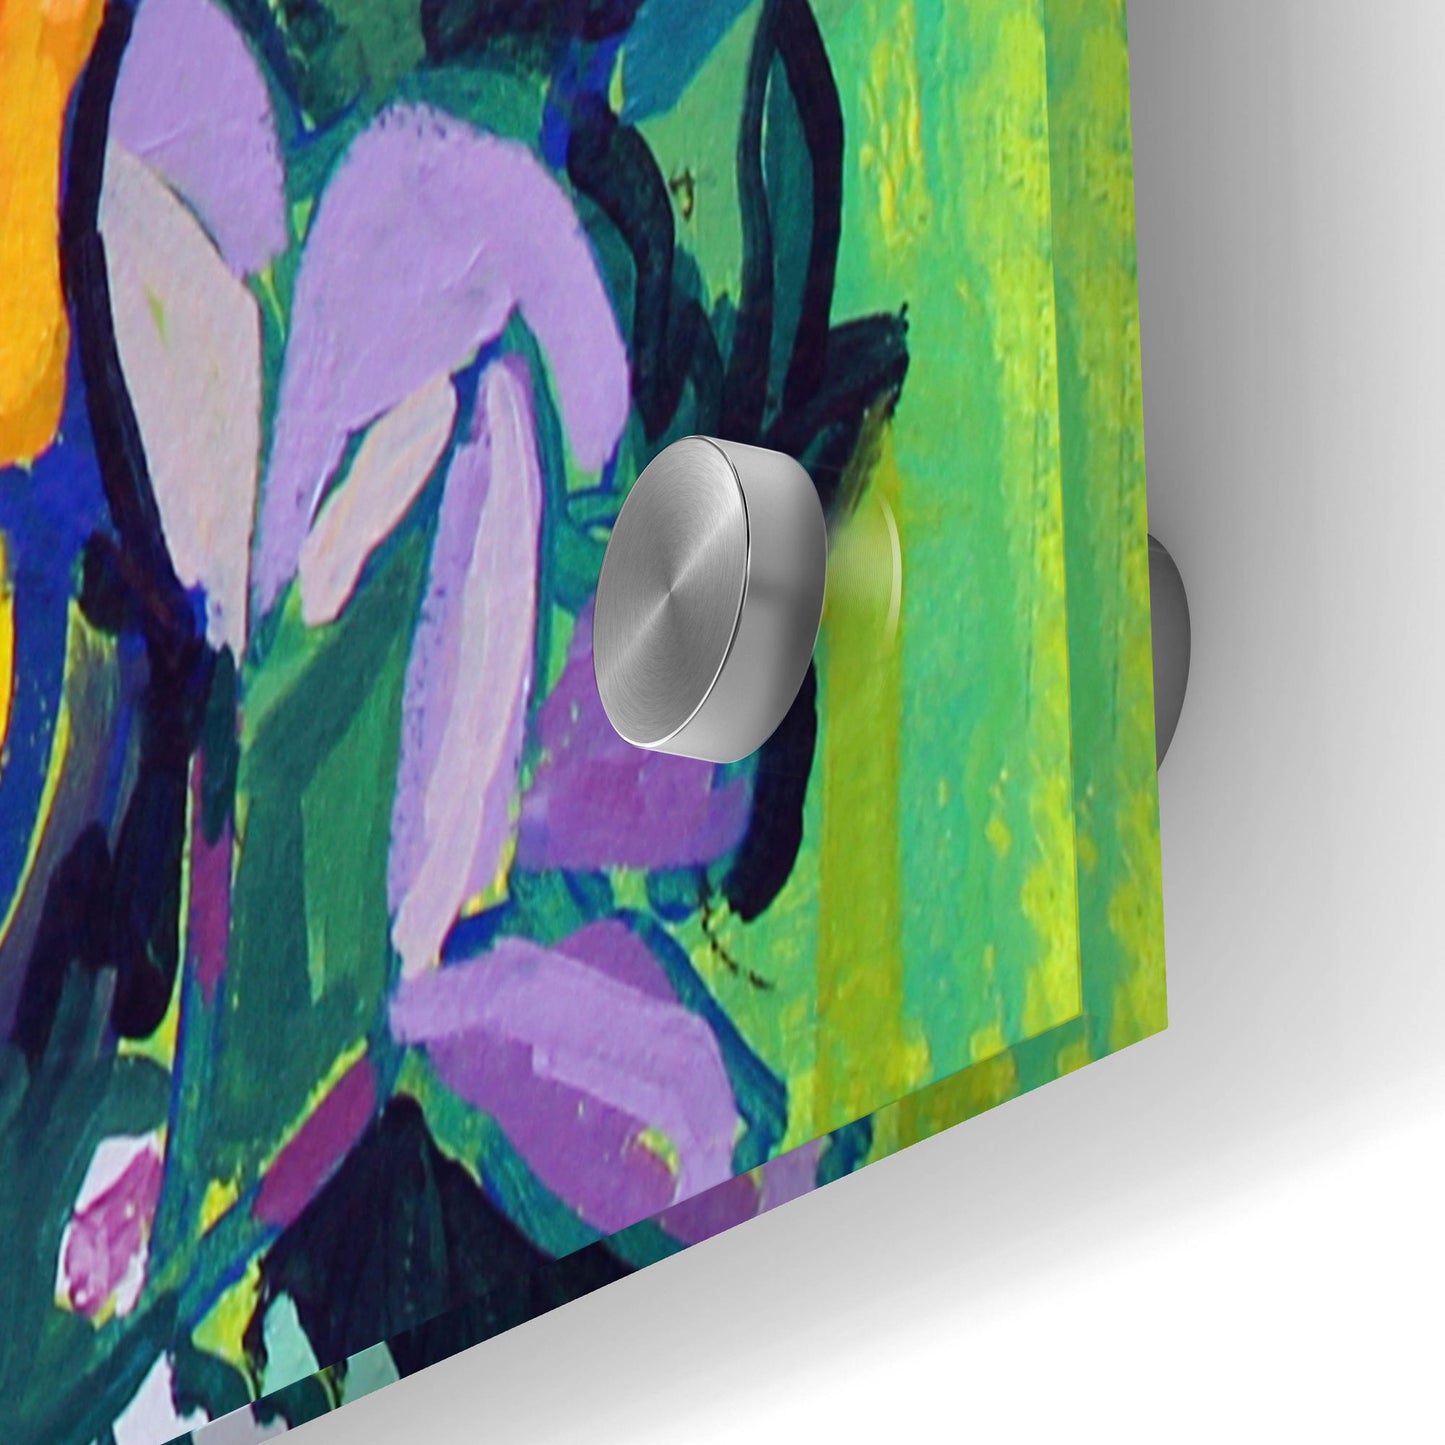 Epic Art 'Super Bloom' by Victoria Macmillan, Acrylic Glass Wall Art,36x24